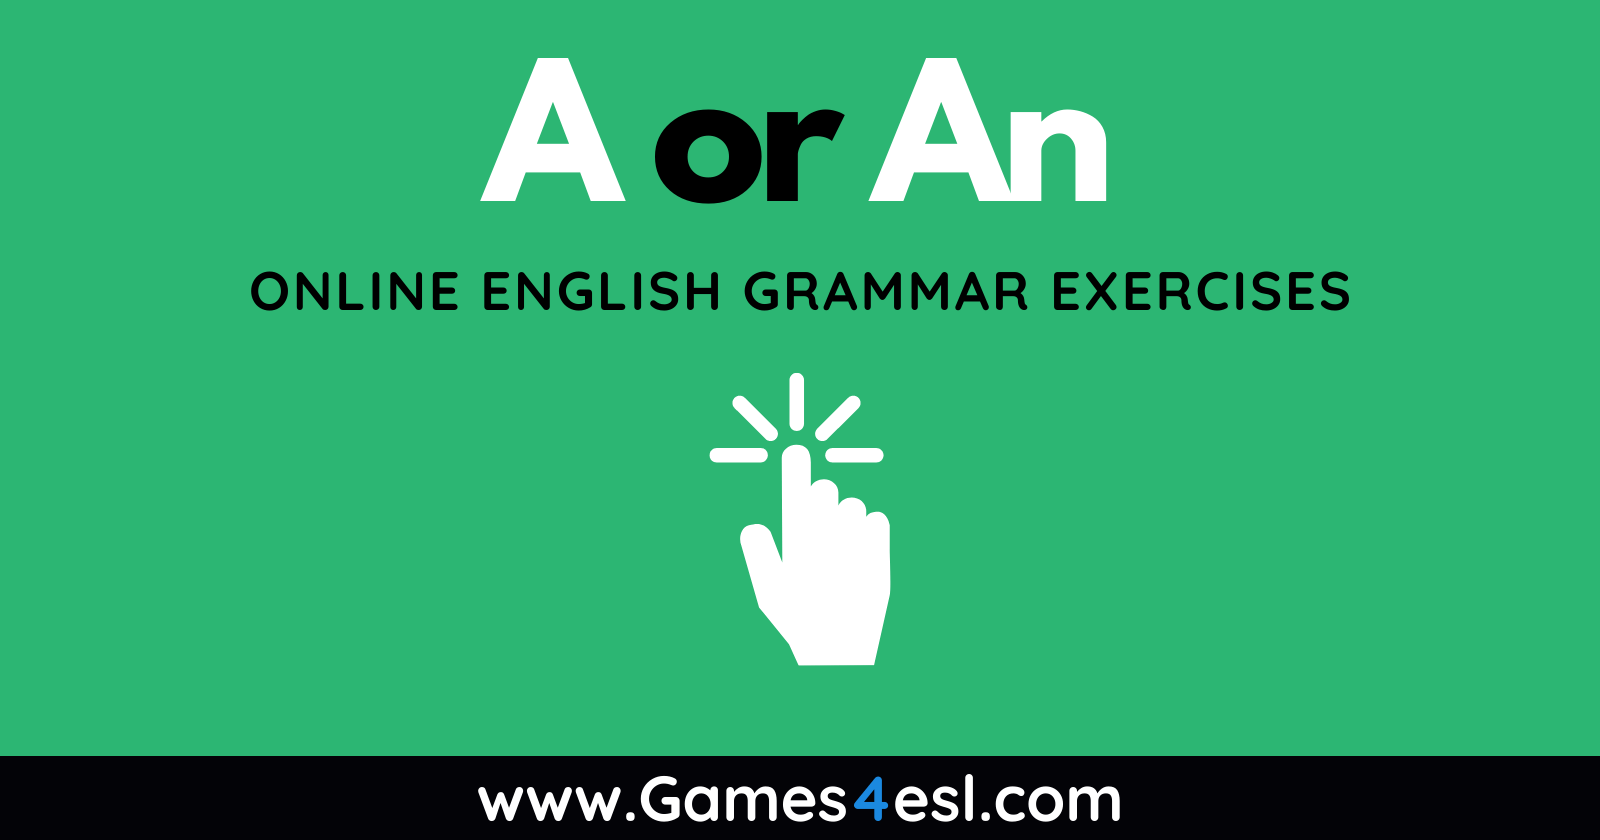 A or An Grammar Exercises